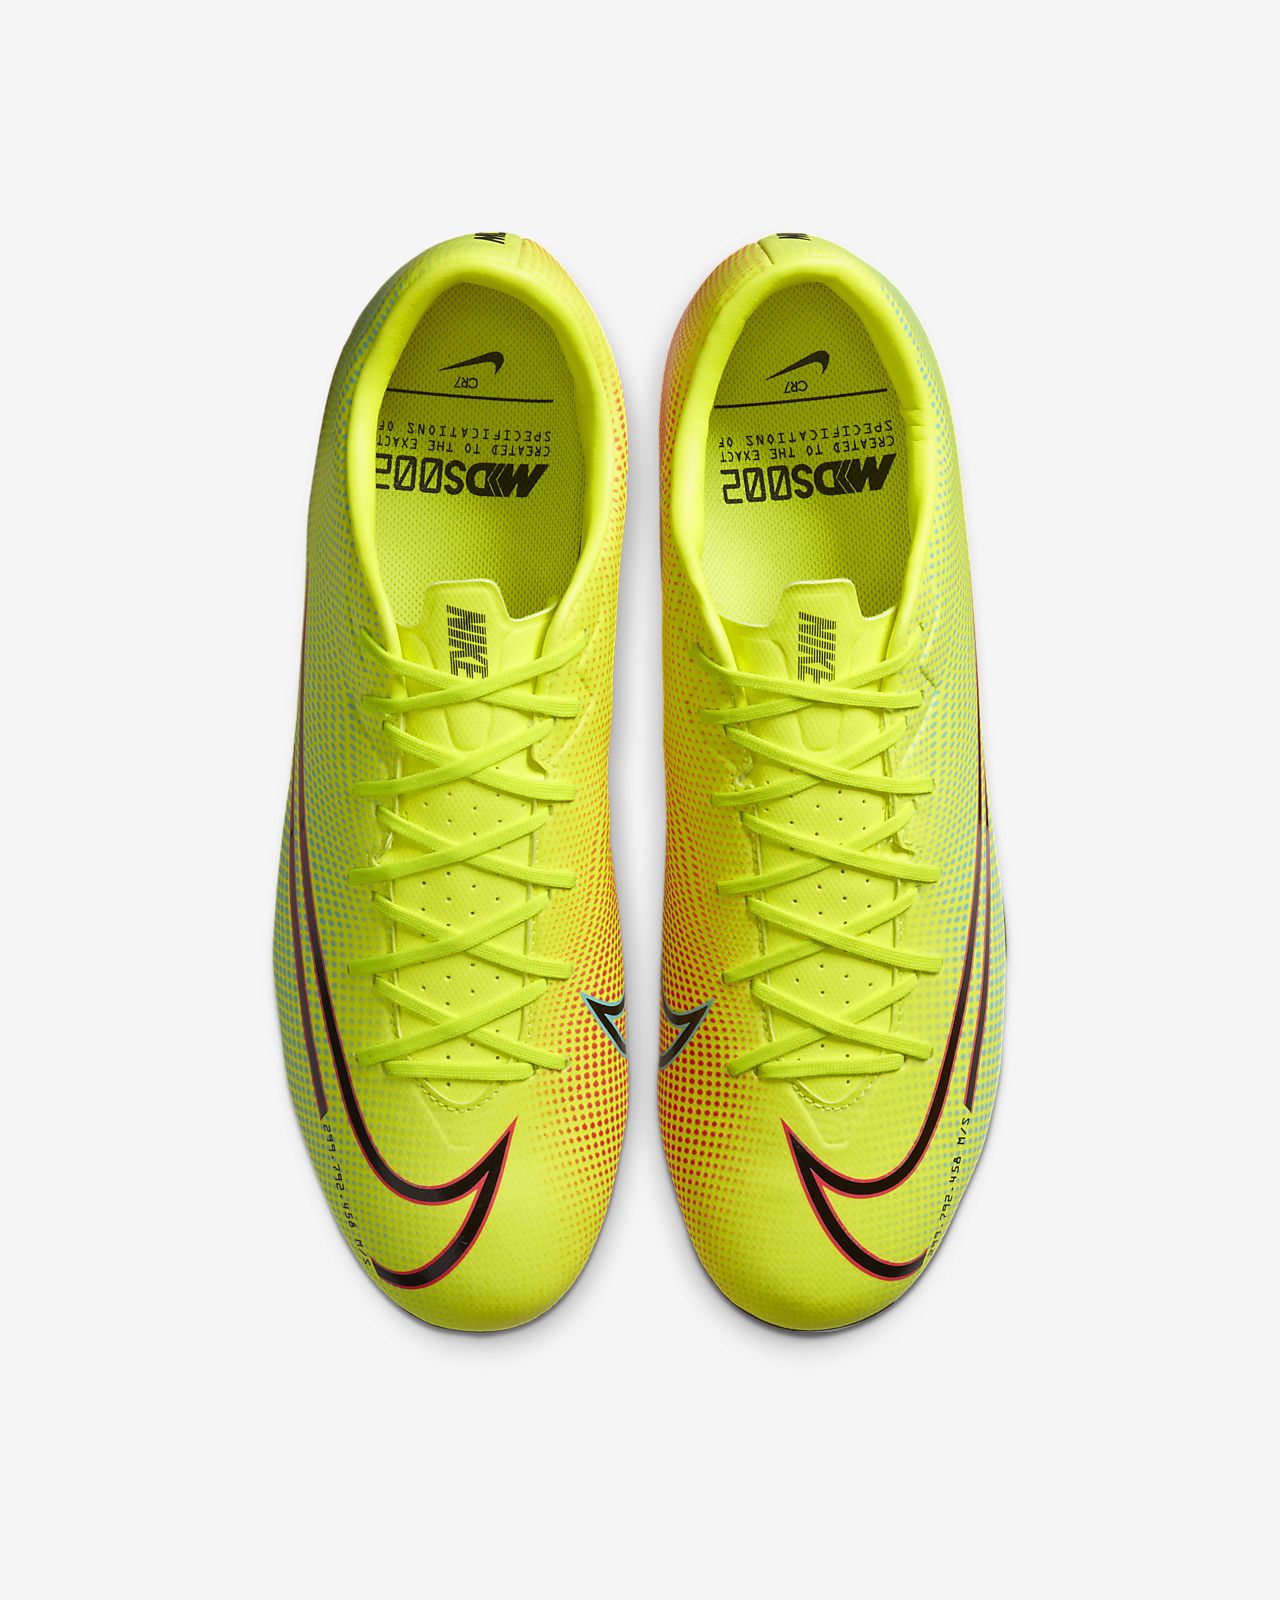 Nike Vapor 13 Academy IC Football Shoes. Amazon